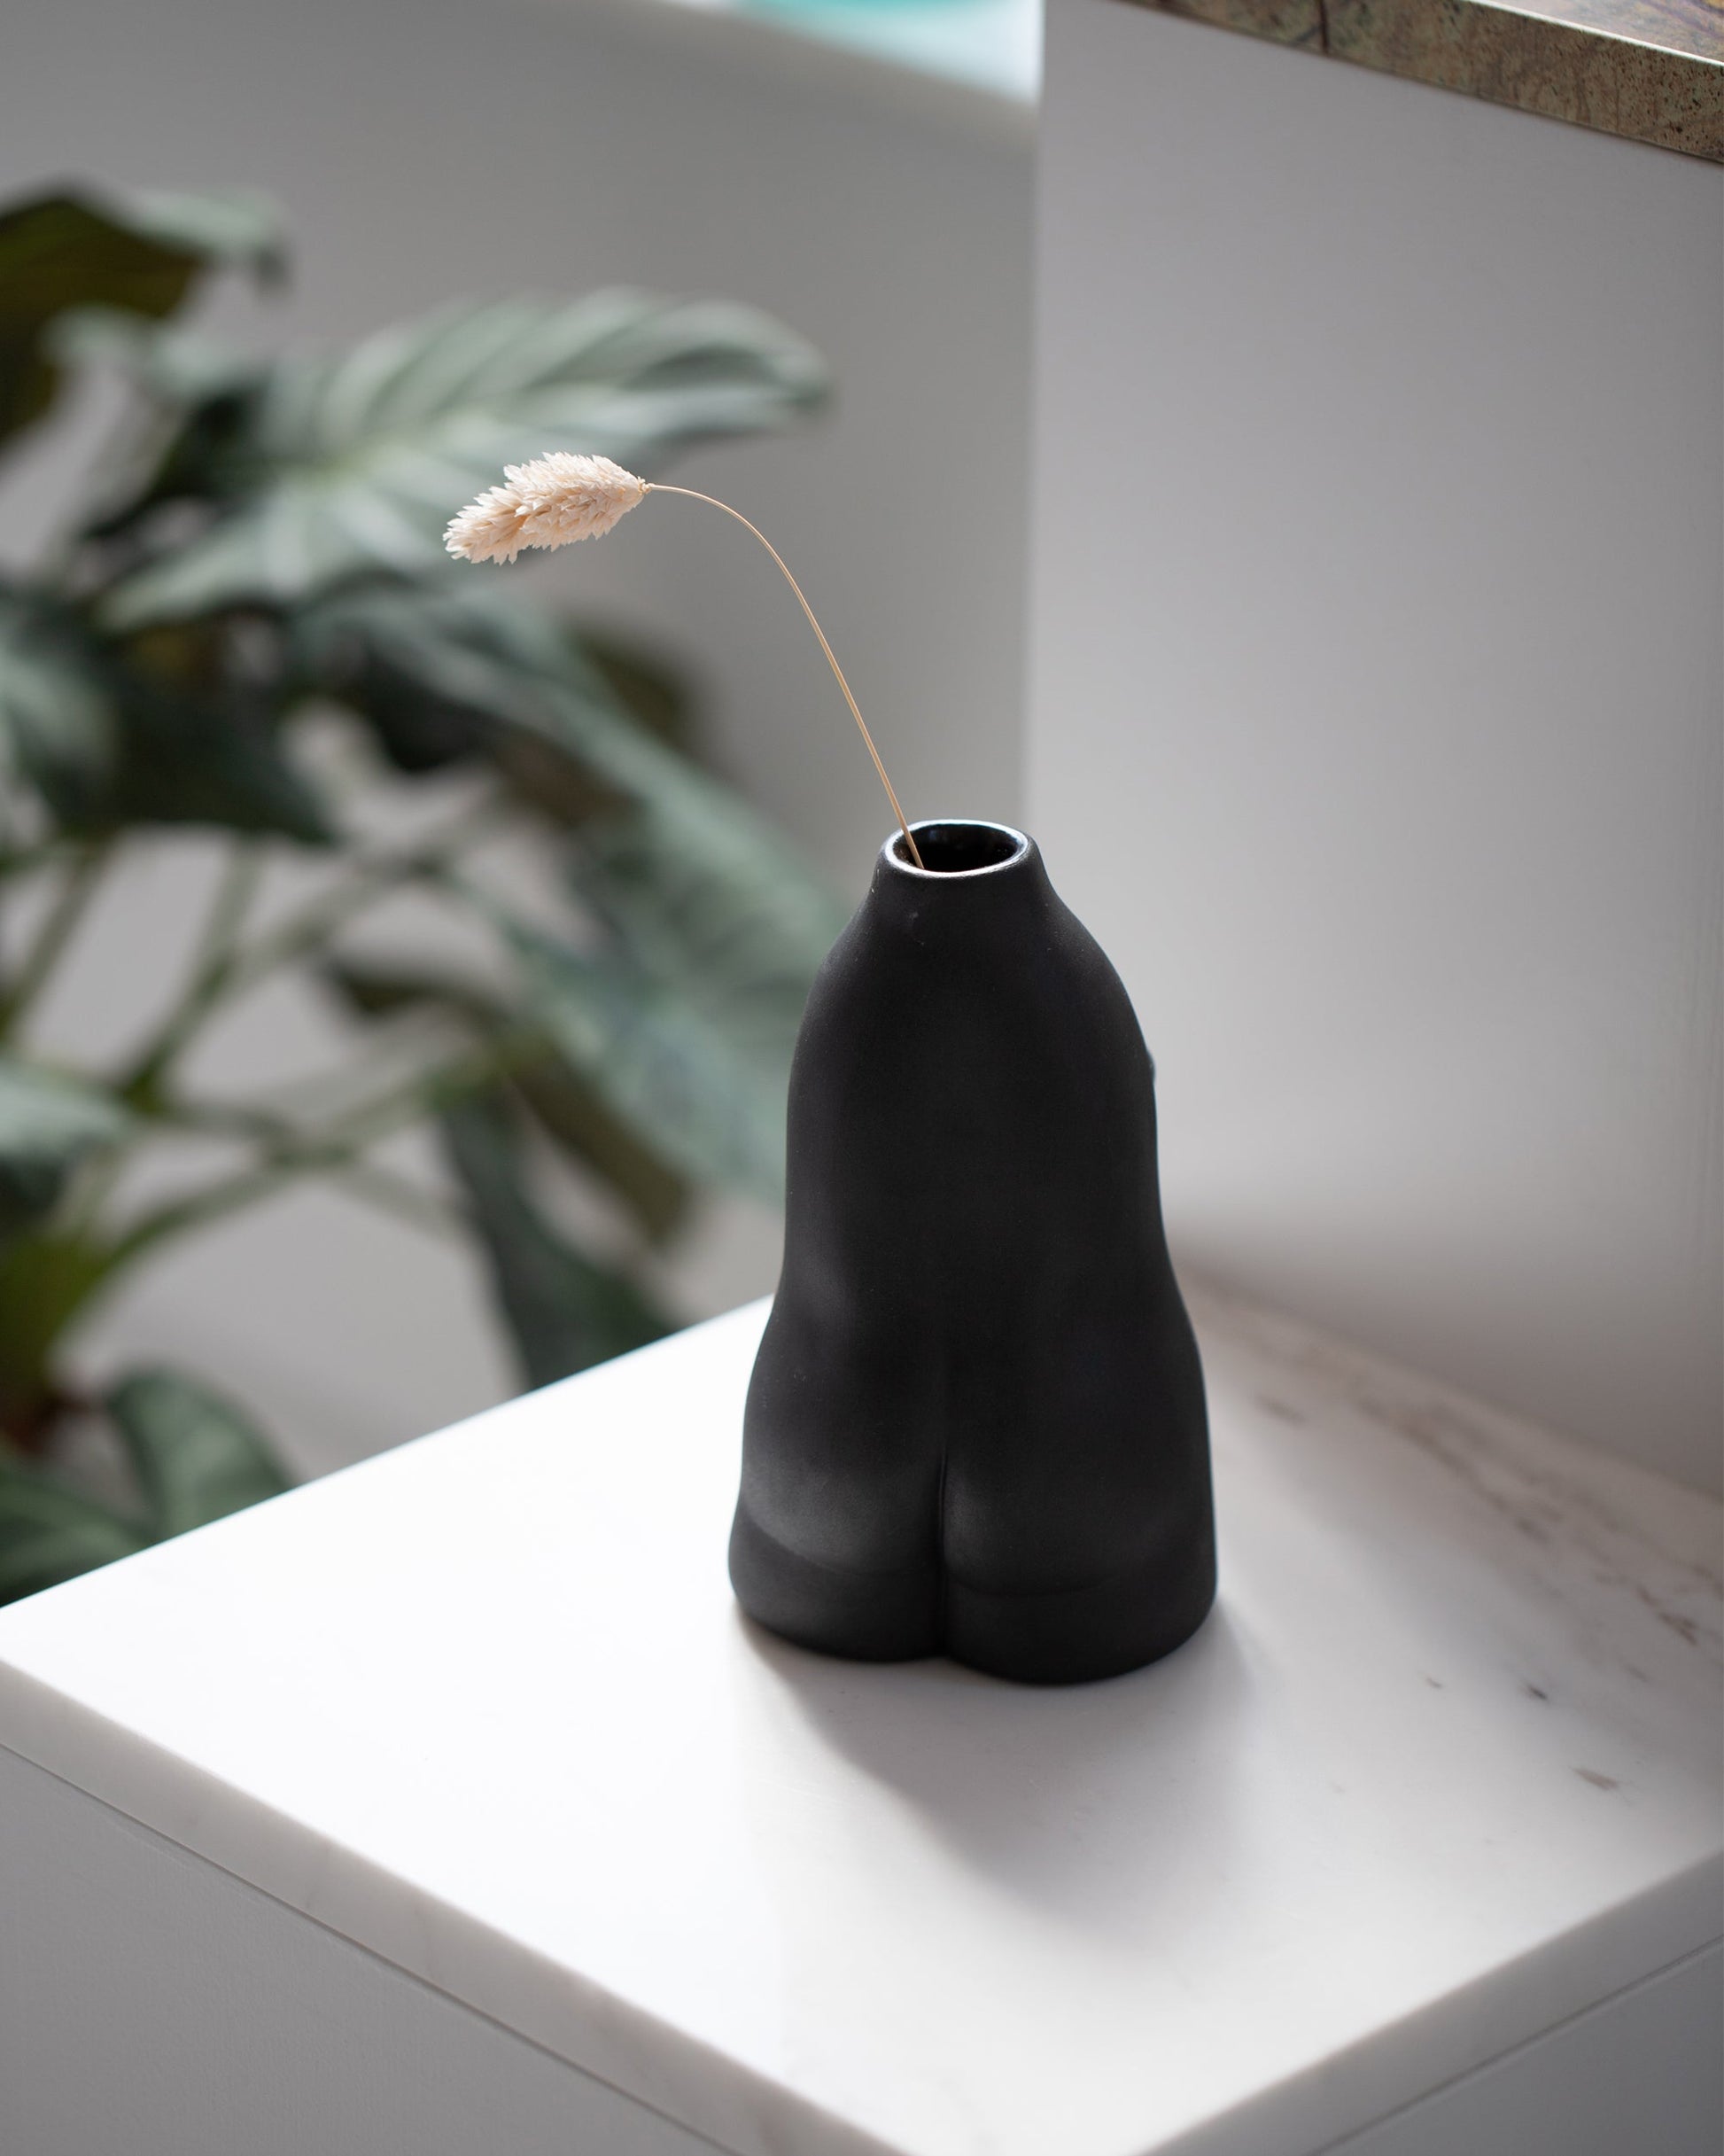 Styled image featuring the Rachel Saunders Black Woman Vase.